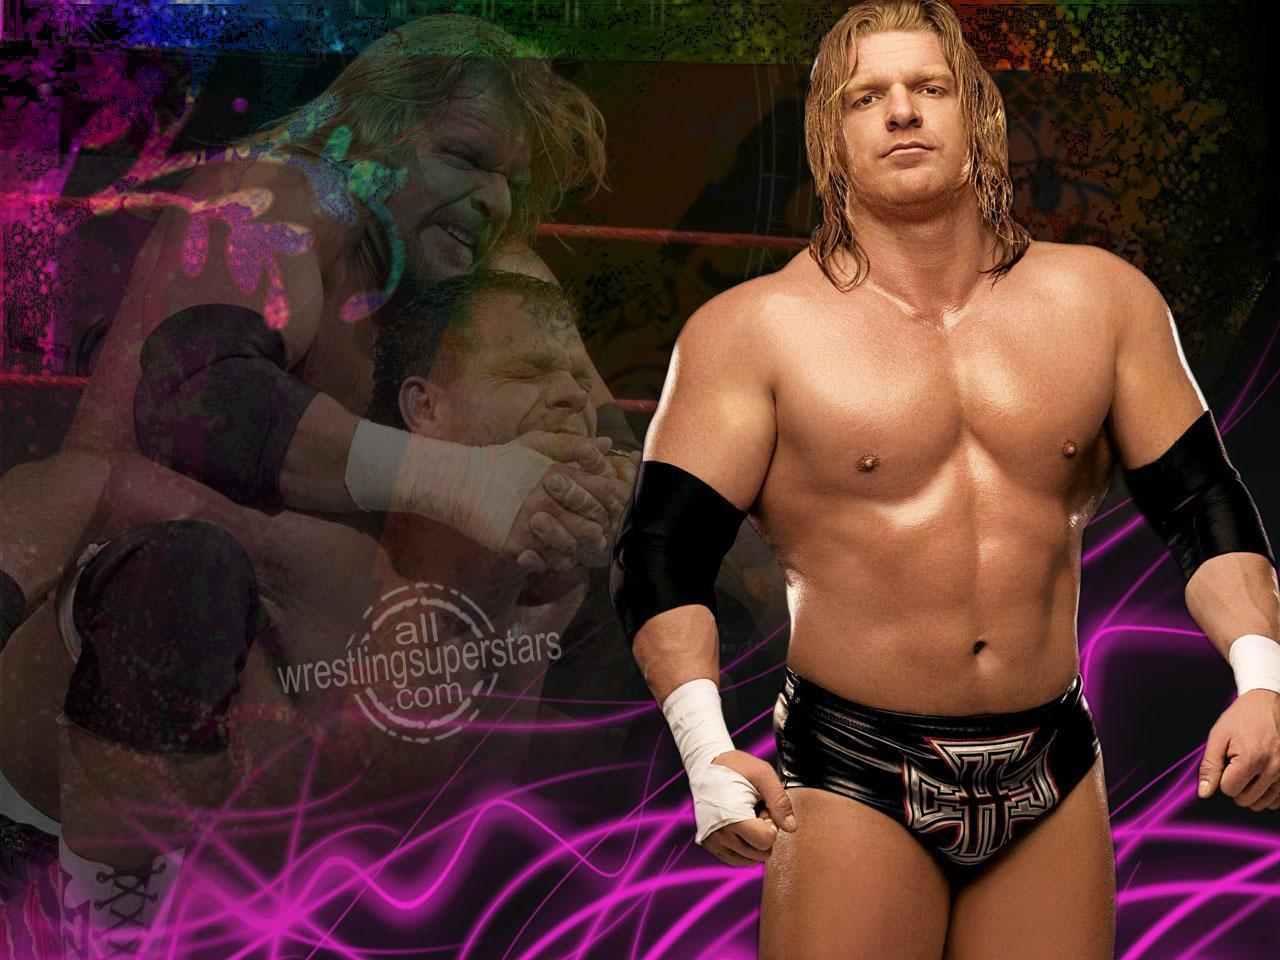 WWE Wrestler Triple H The Game